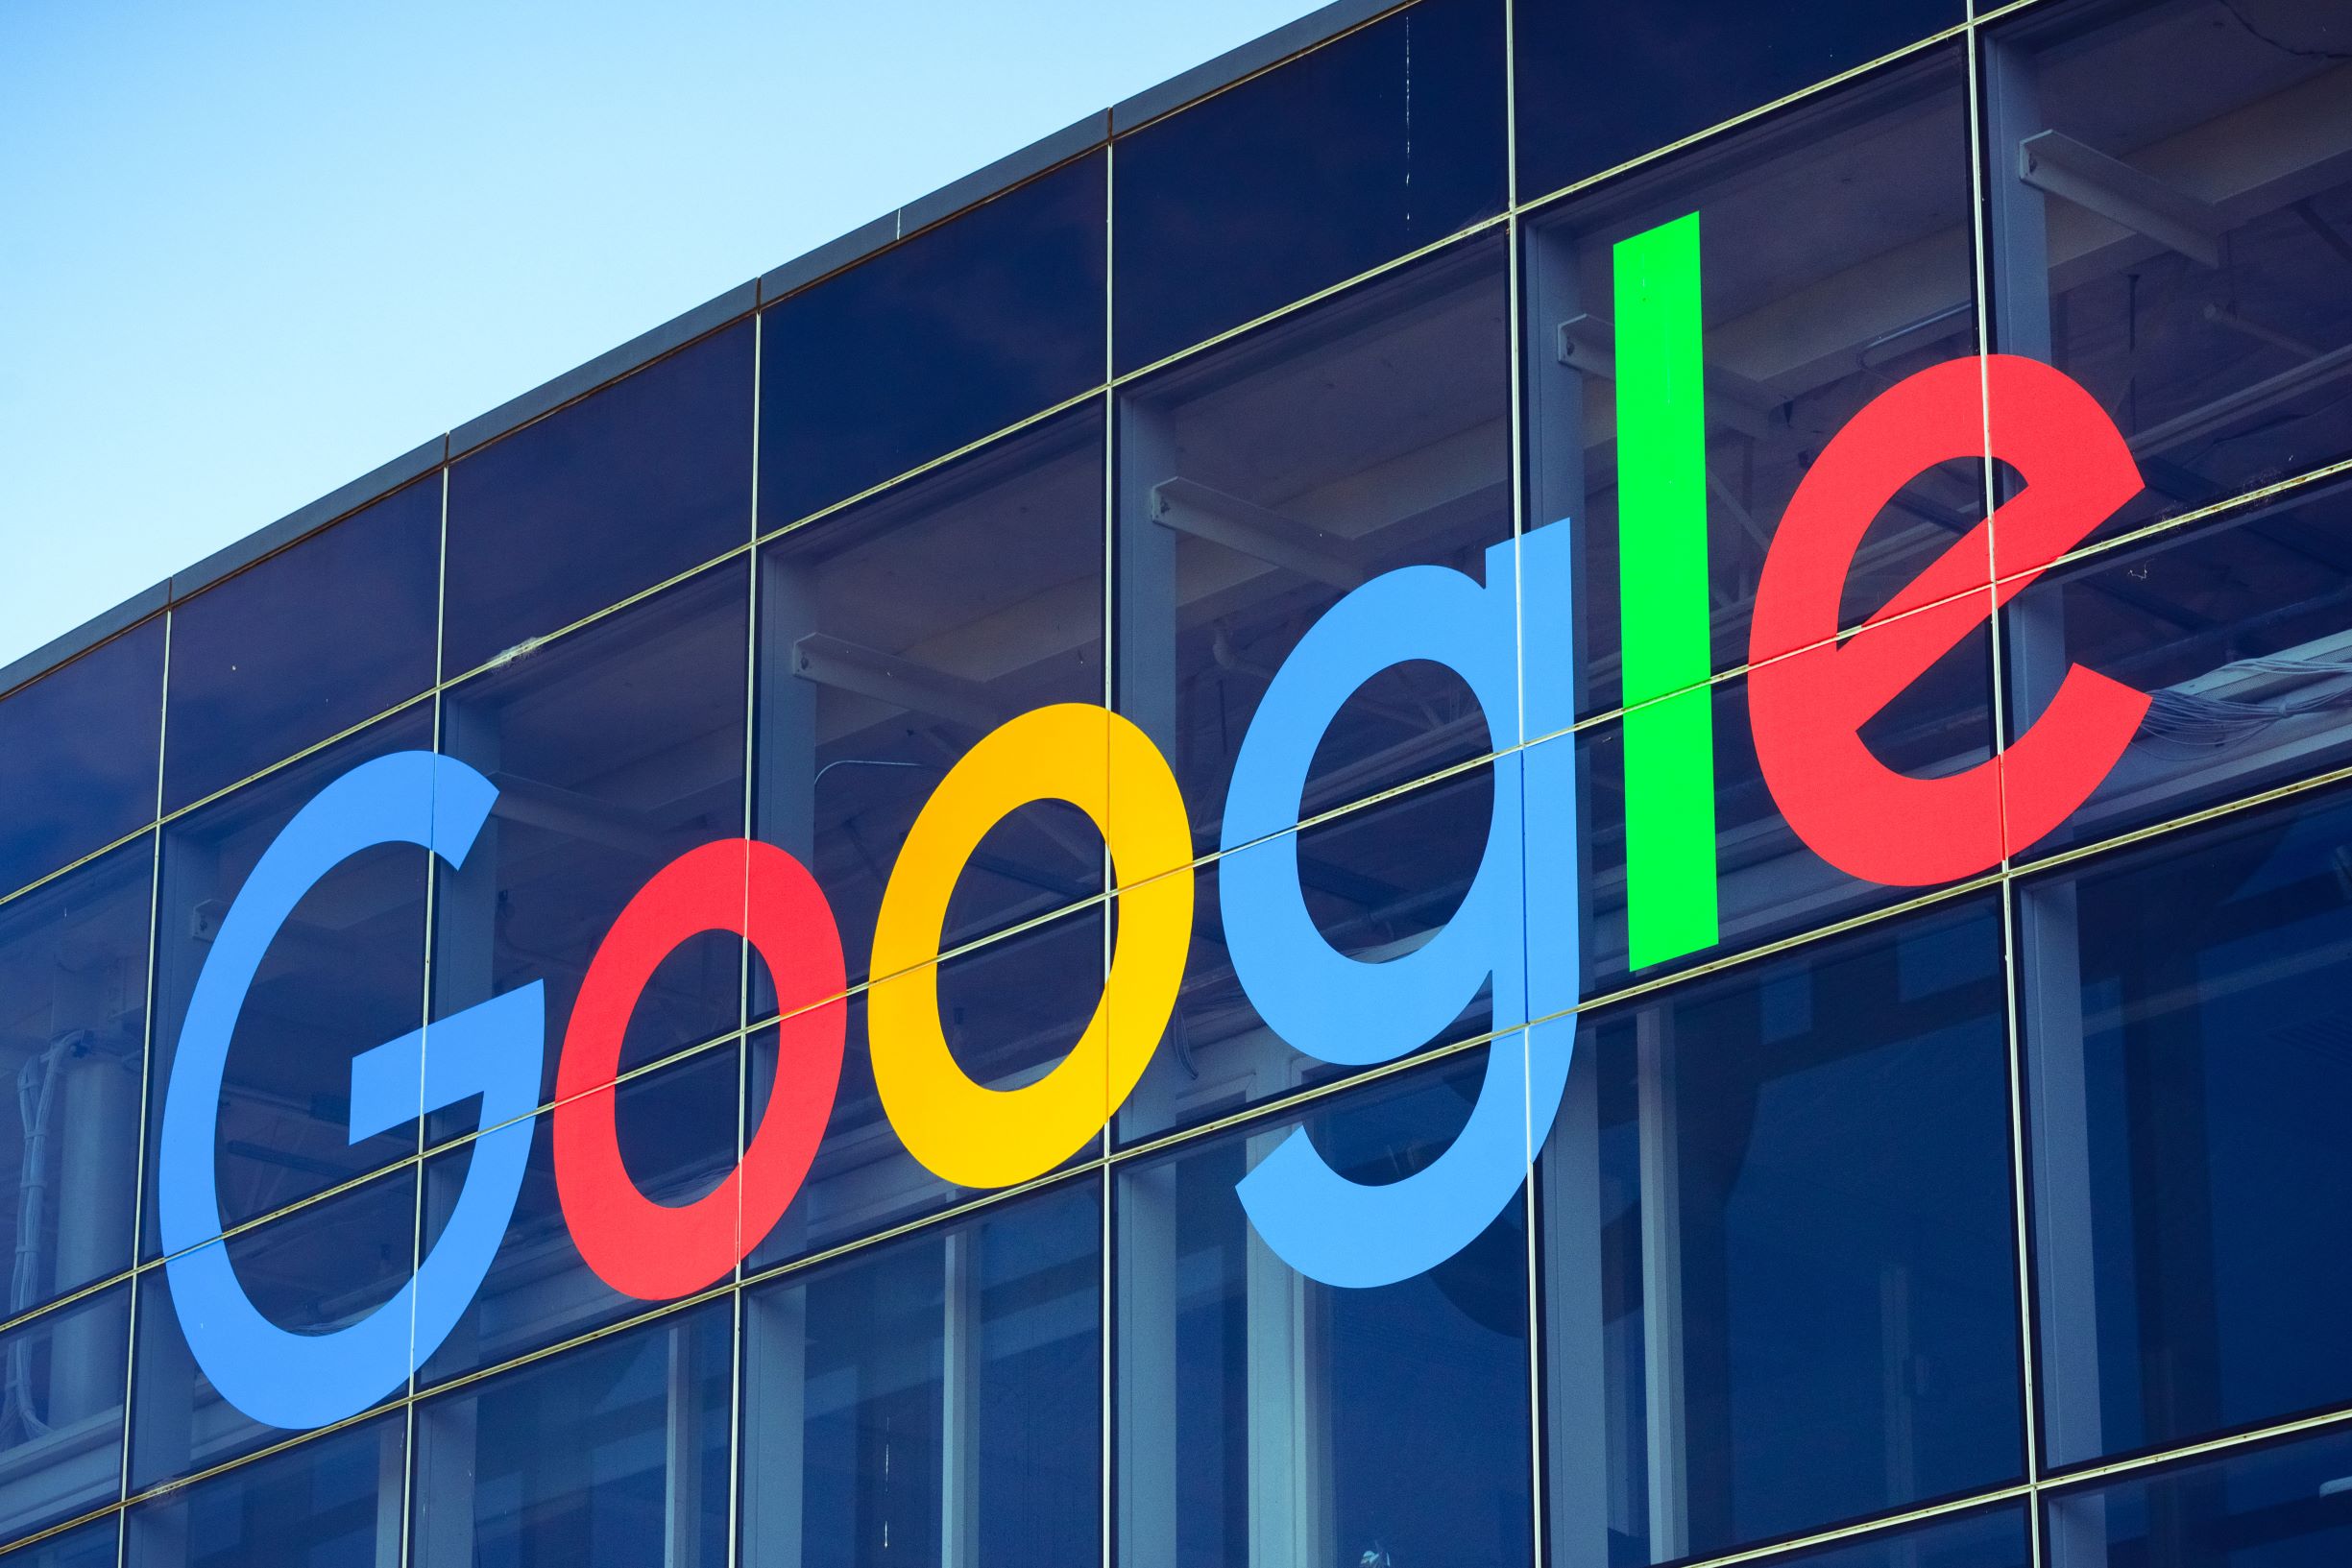 Google to end Bermuda tax scheme